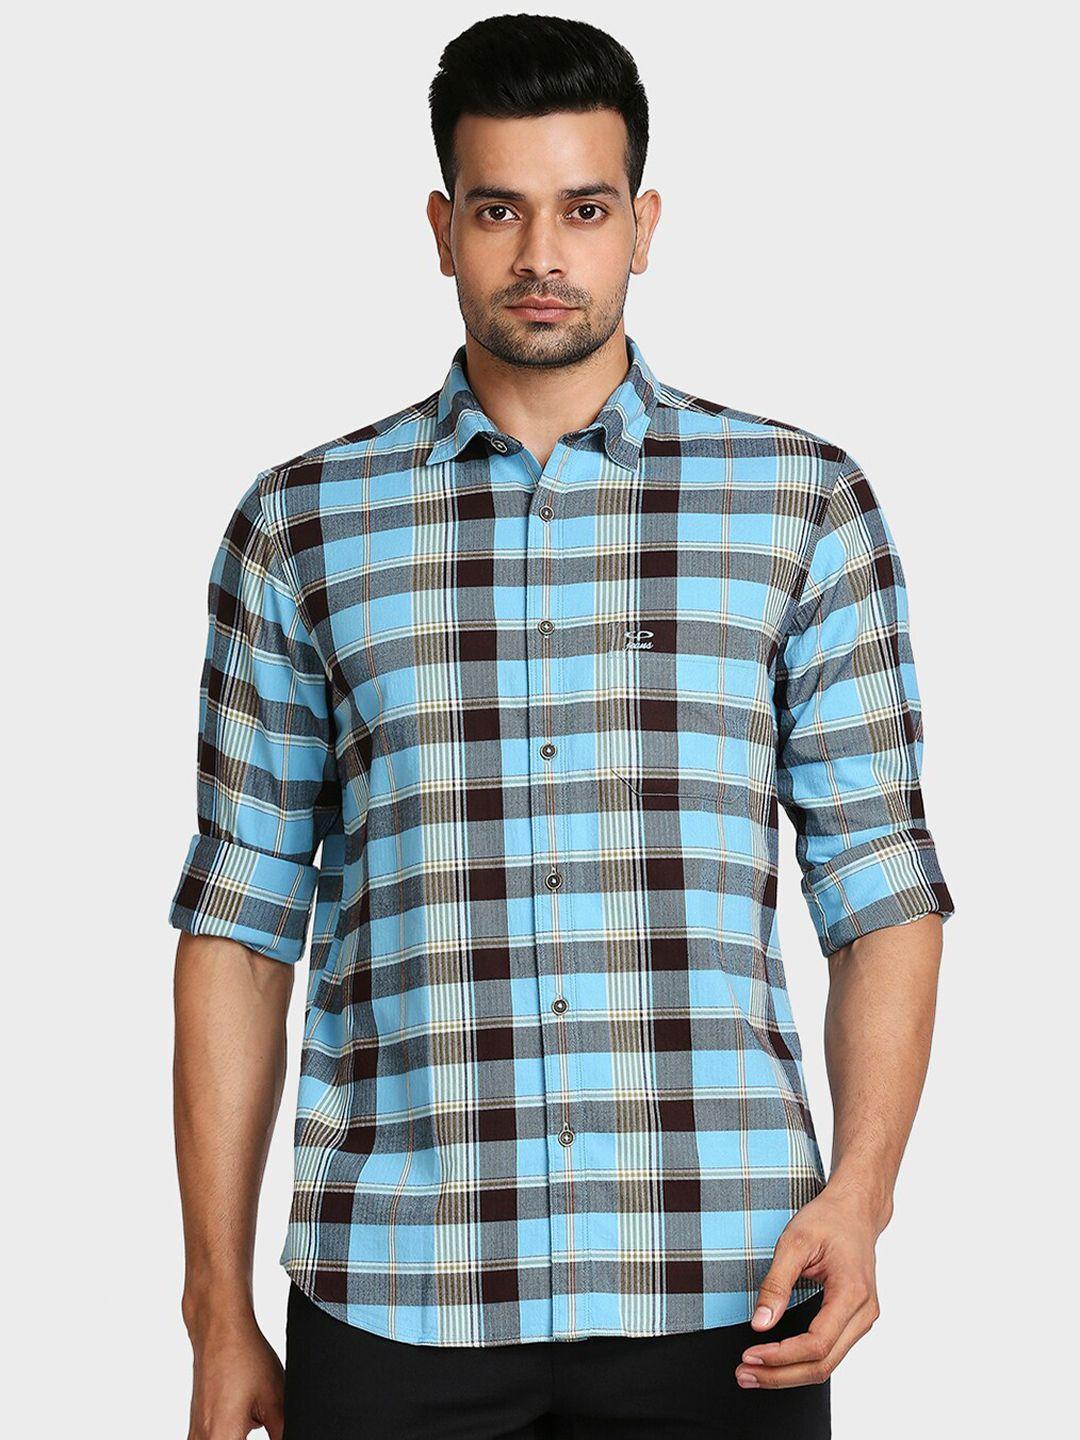 colorplus-men-blue-tailored-fit-tartan-checks-checked-casual-shirt